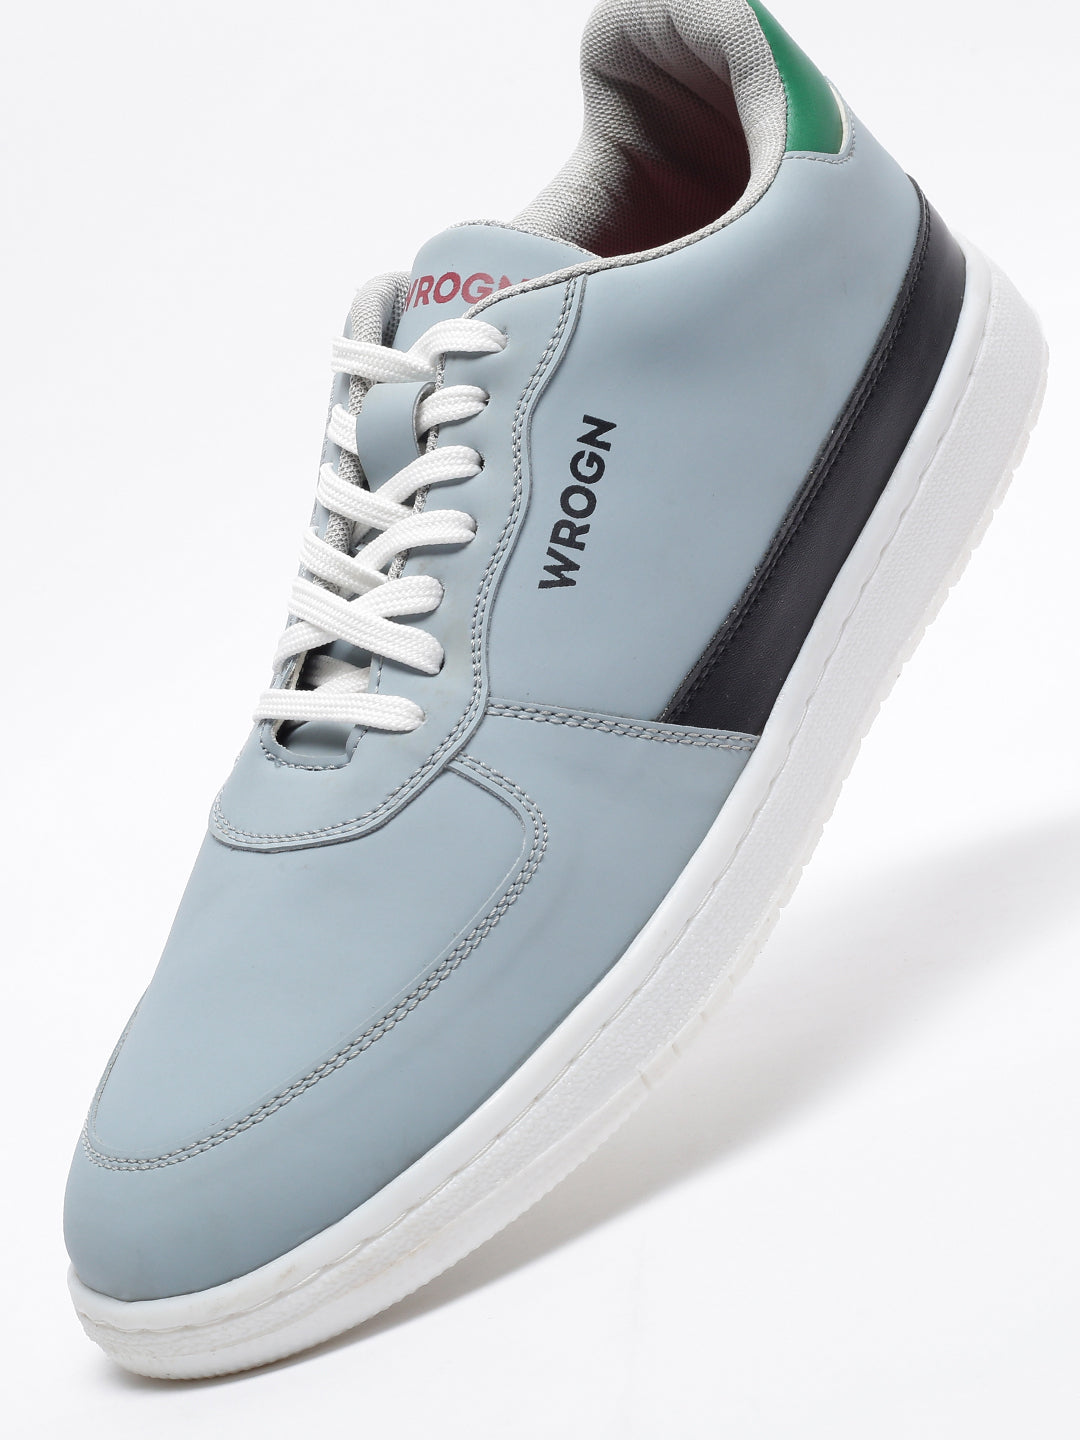 Wrogn Tint Blue Sneakers